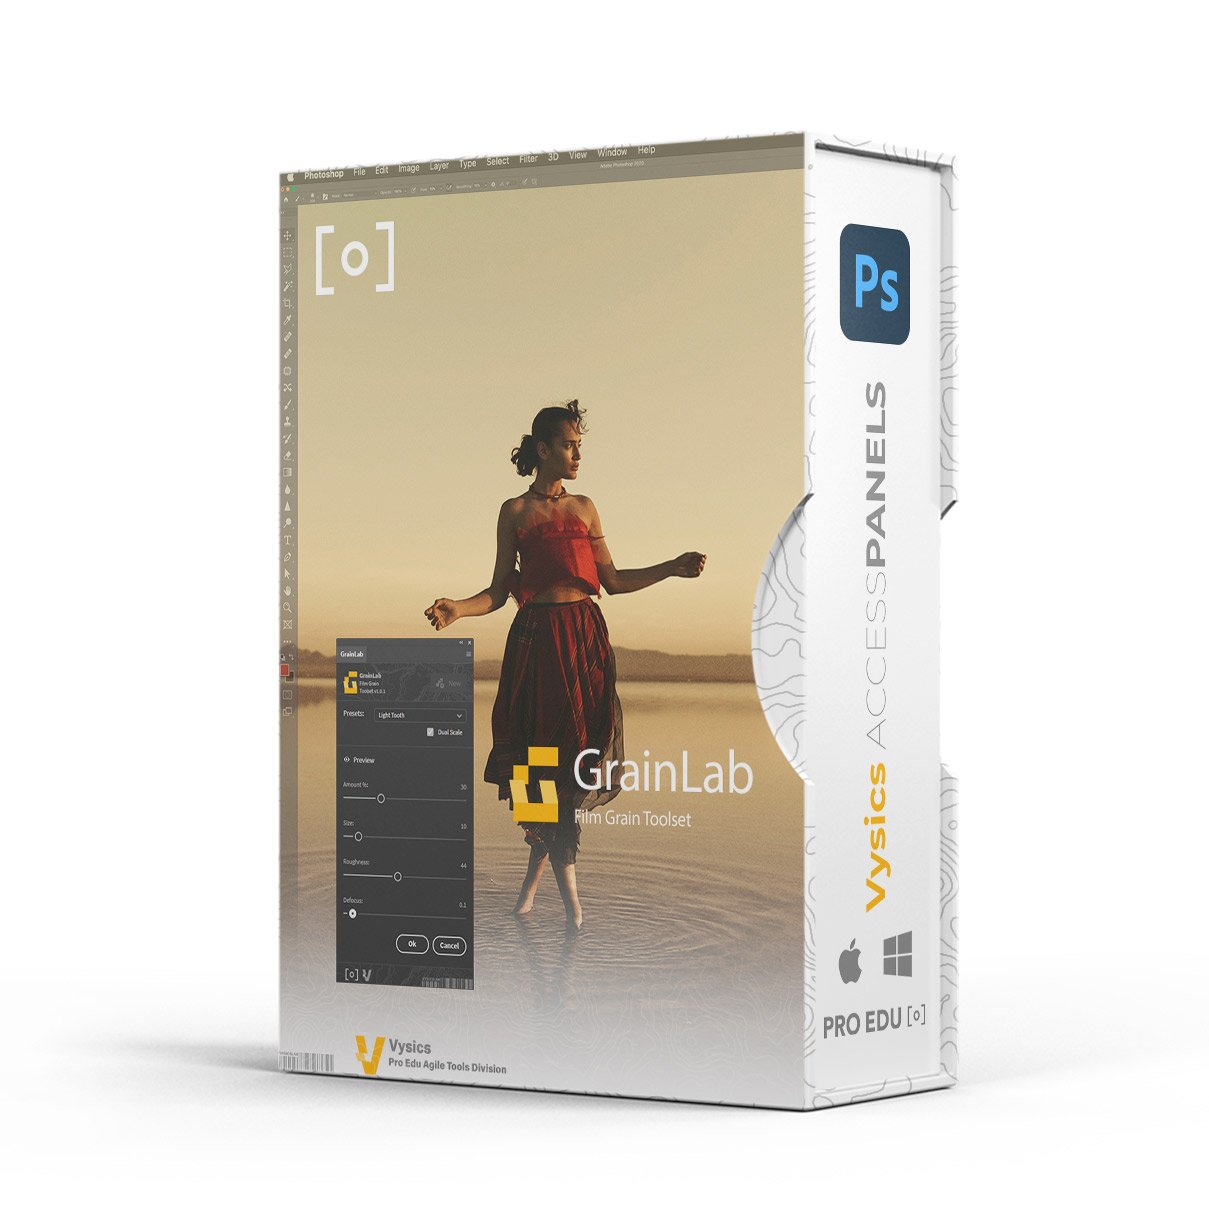 GrainLab Photoshop Plugin - Film Grain Toolset Software - PRO EDU PRO EDU PRO EDU